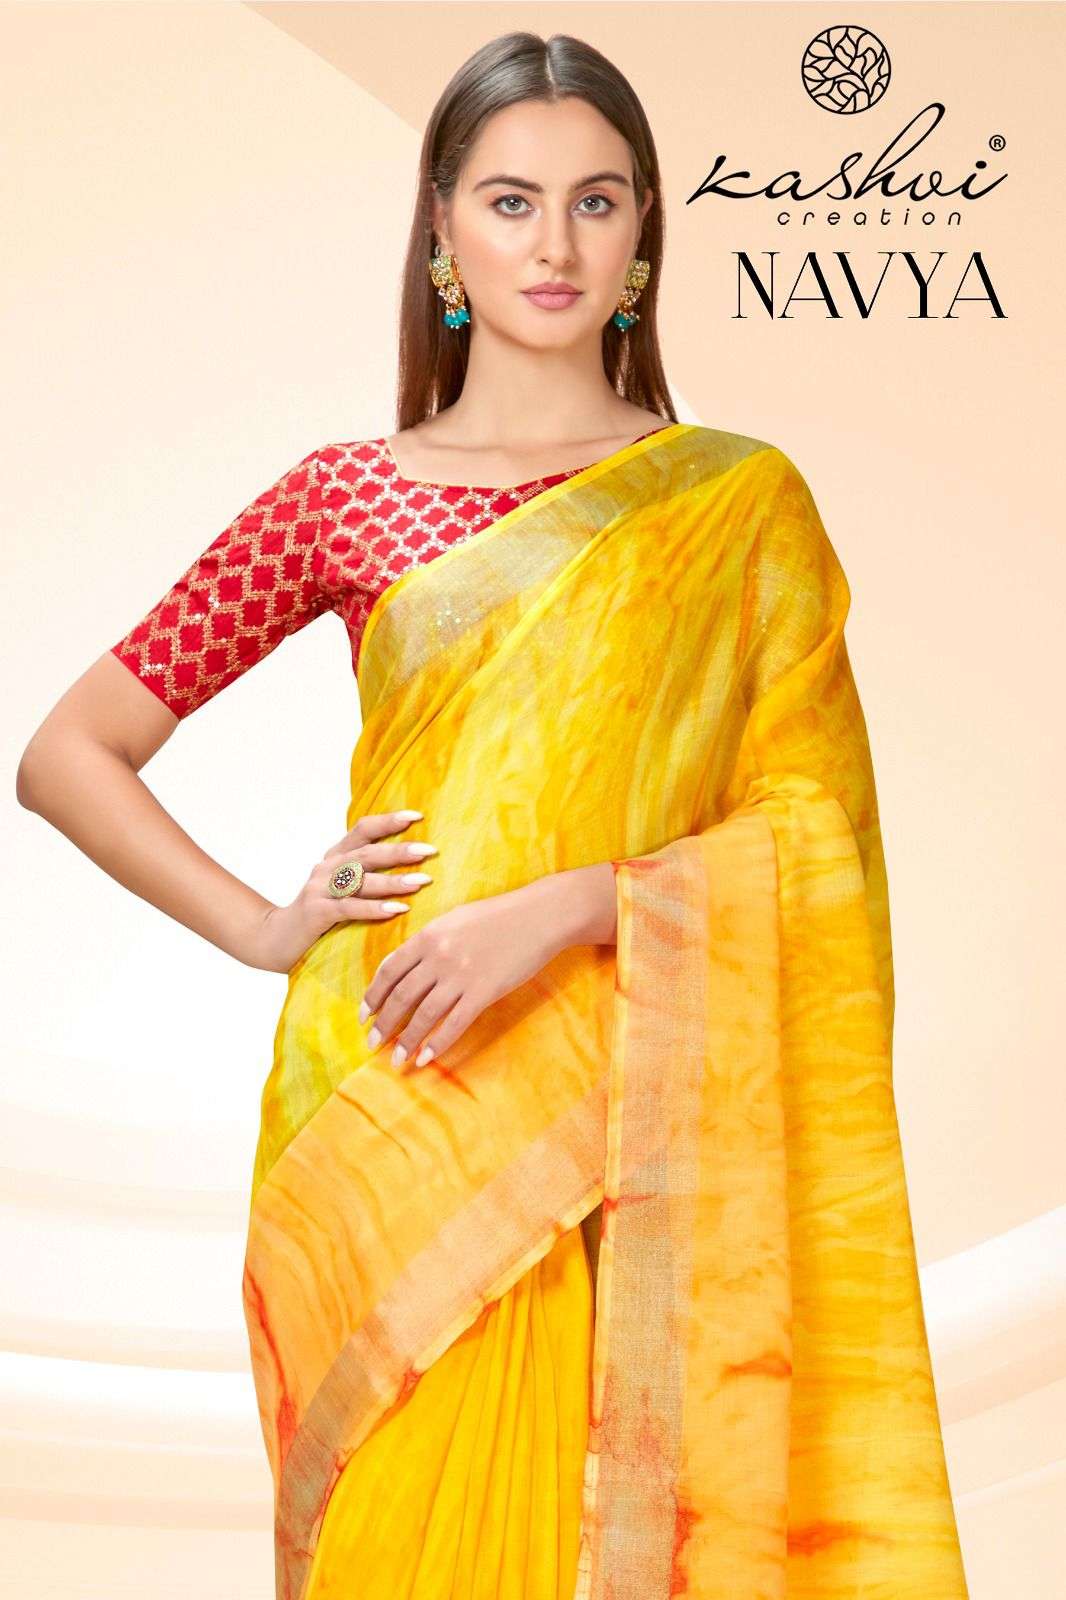 kashvi creation navyaa fancy casual wear sarees collection 